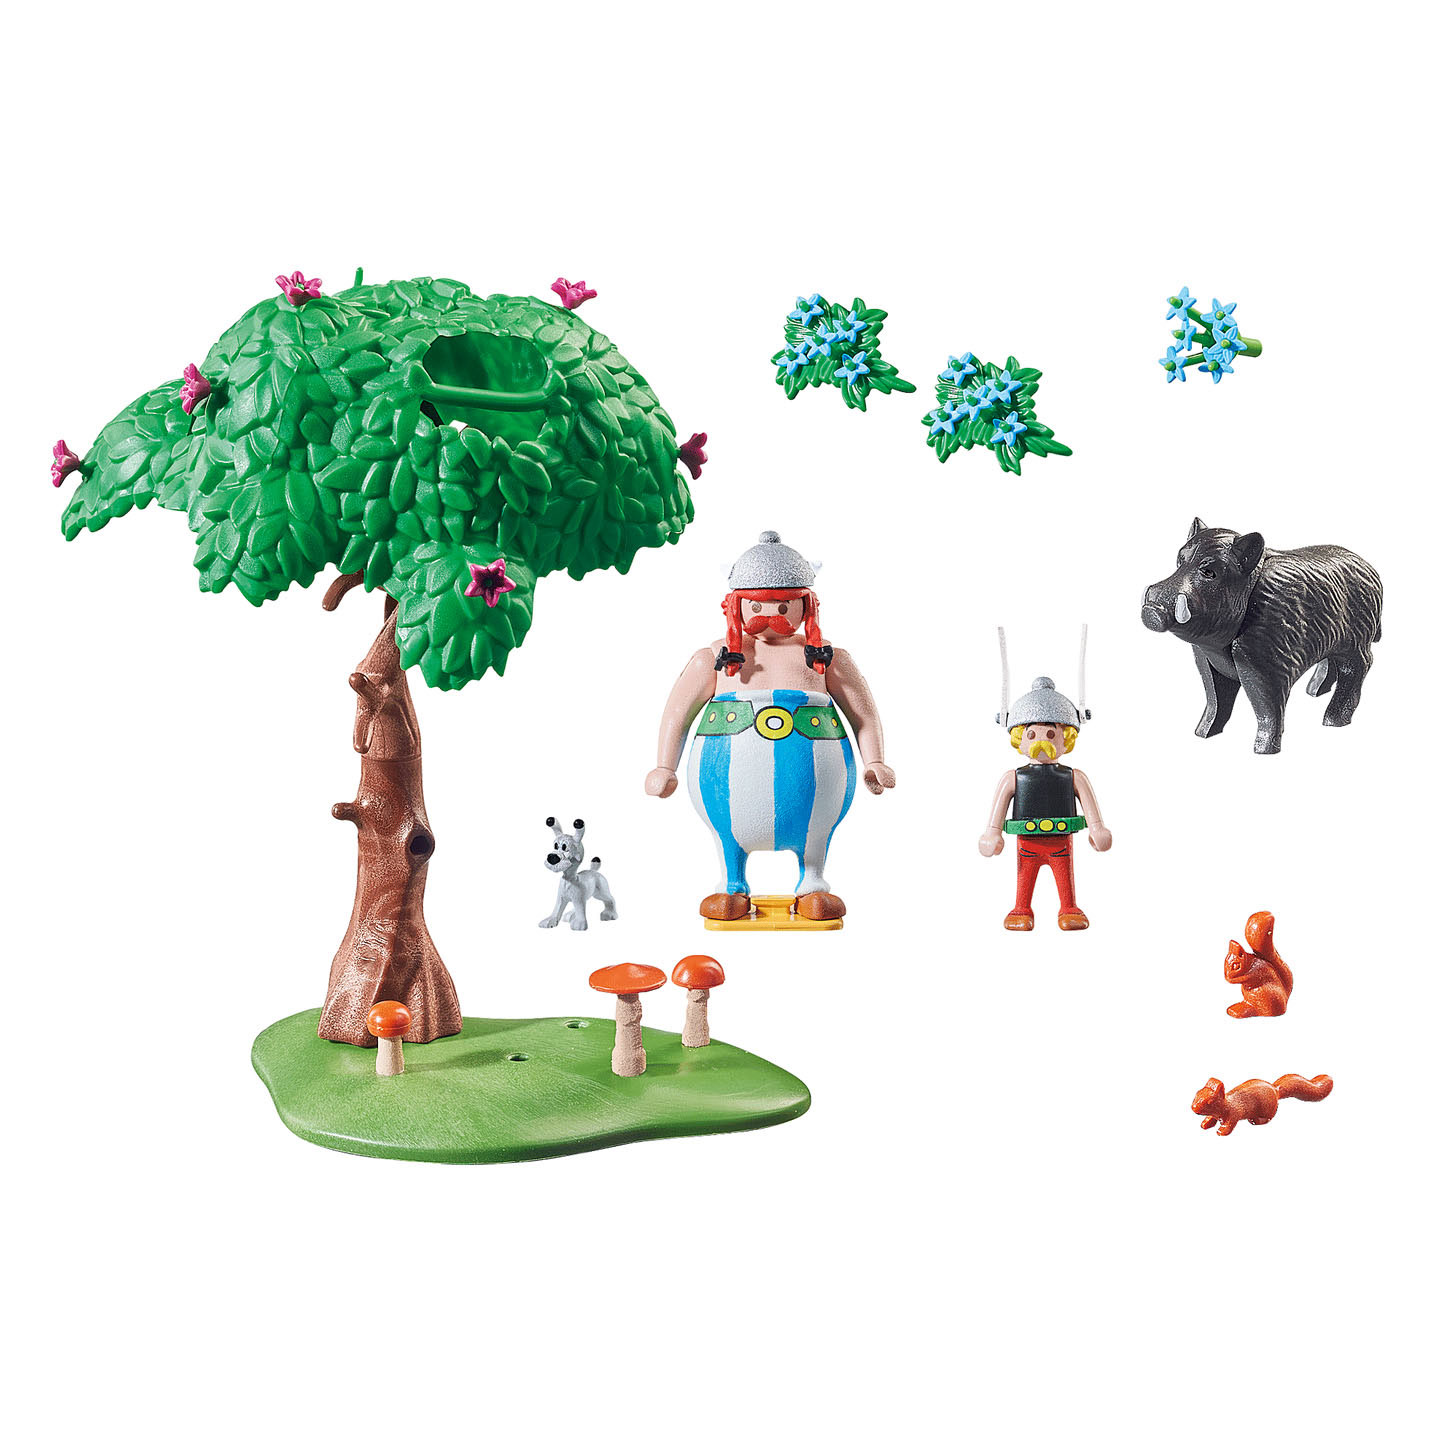 Playmobil Asterix Wildschweinjagd - 71160